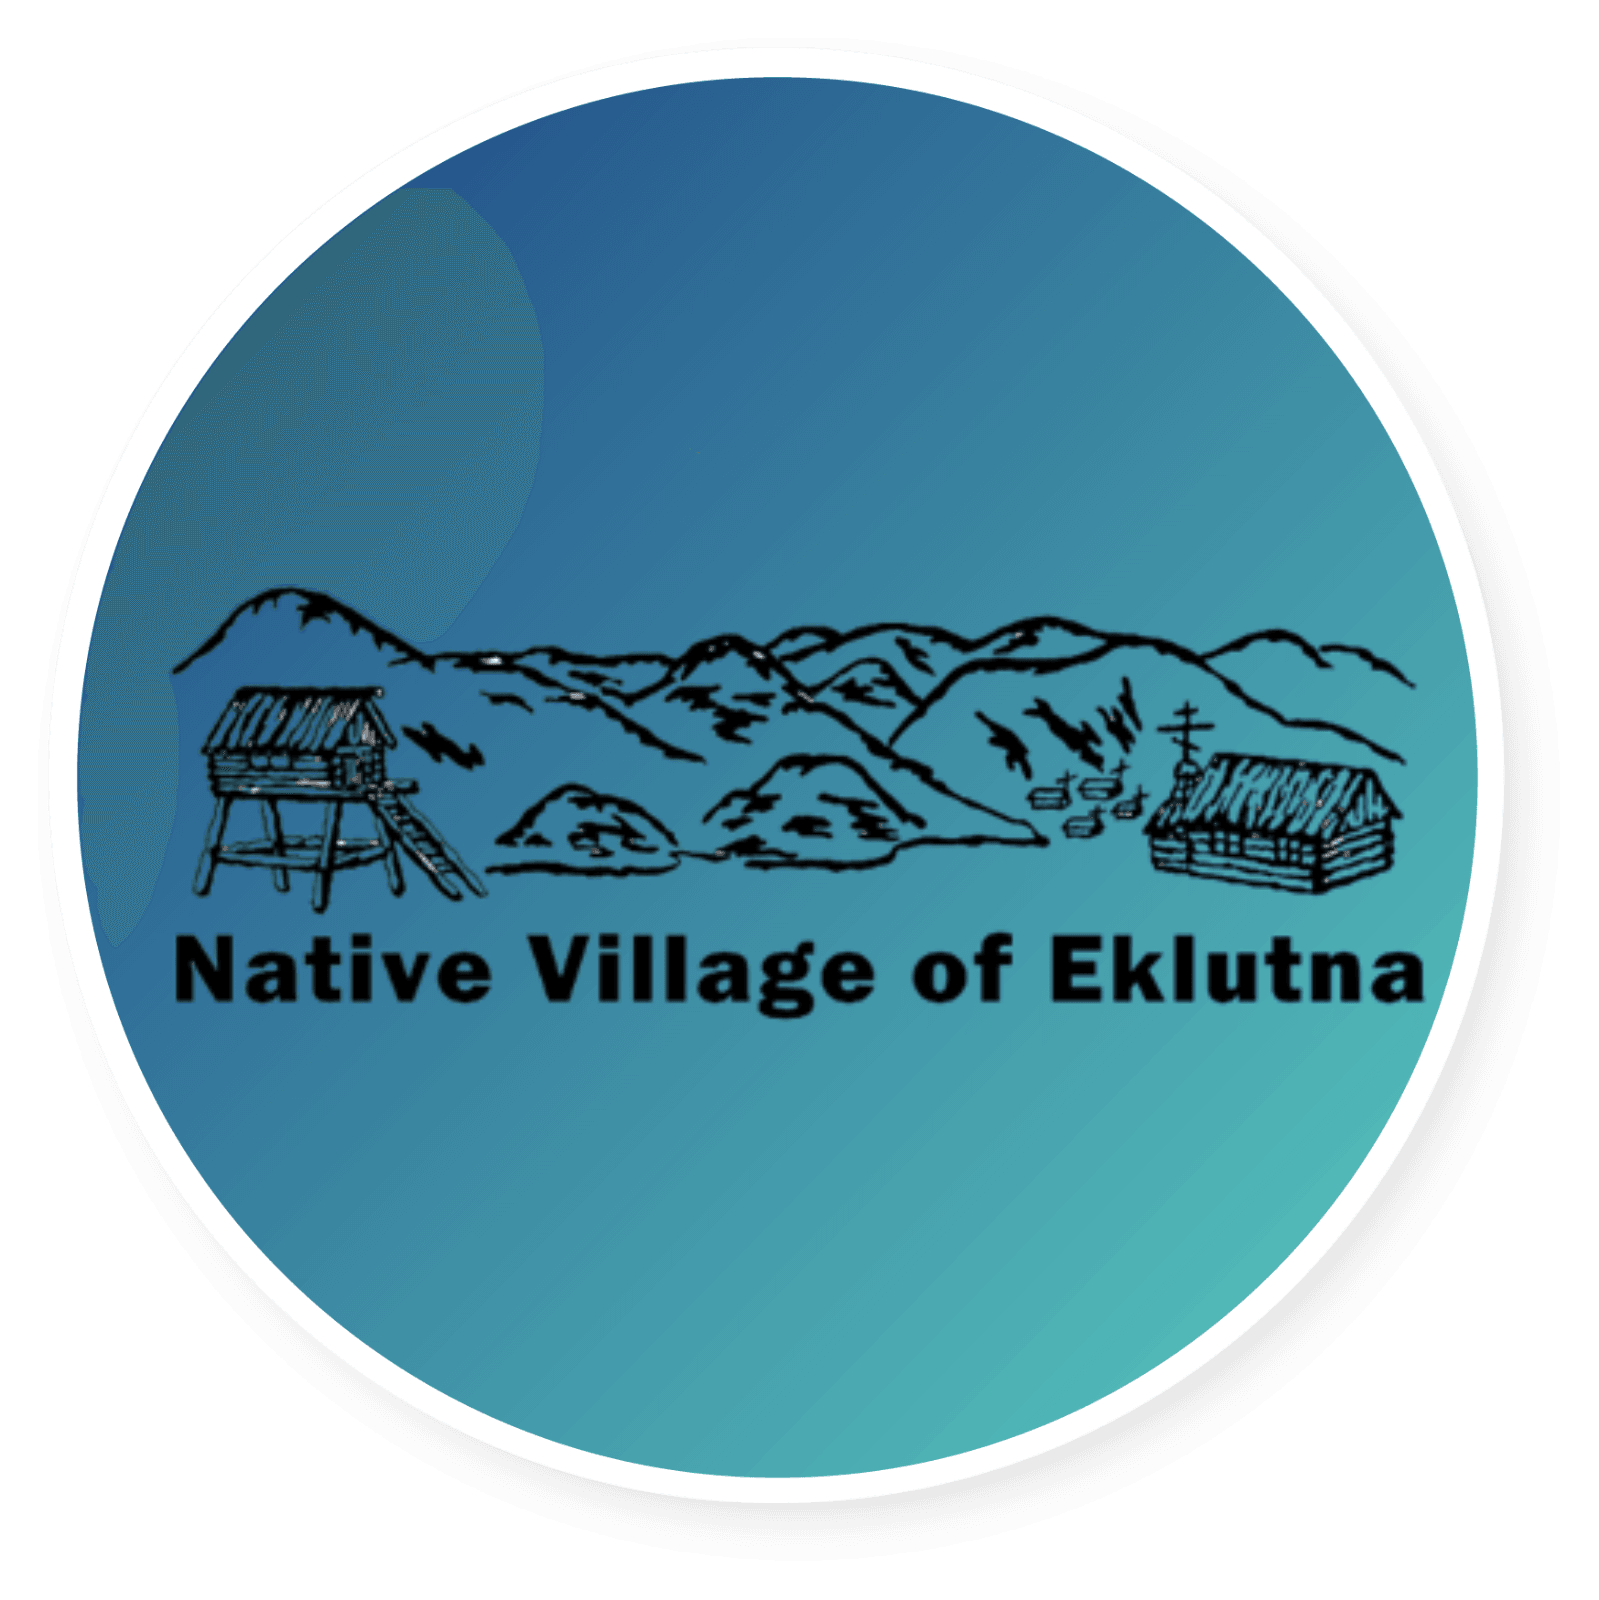 Native Village of Eklutna